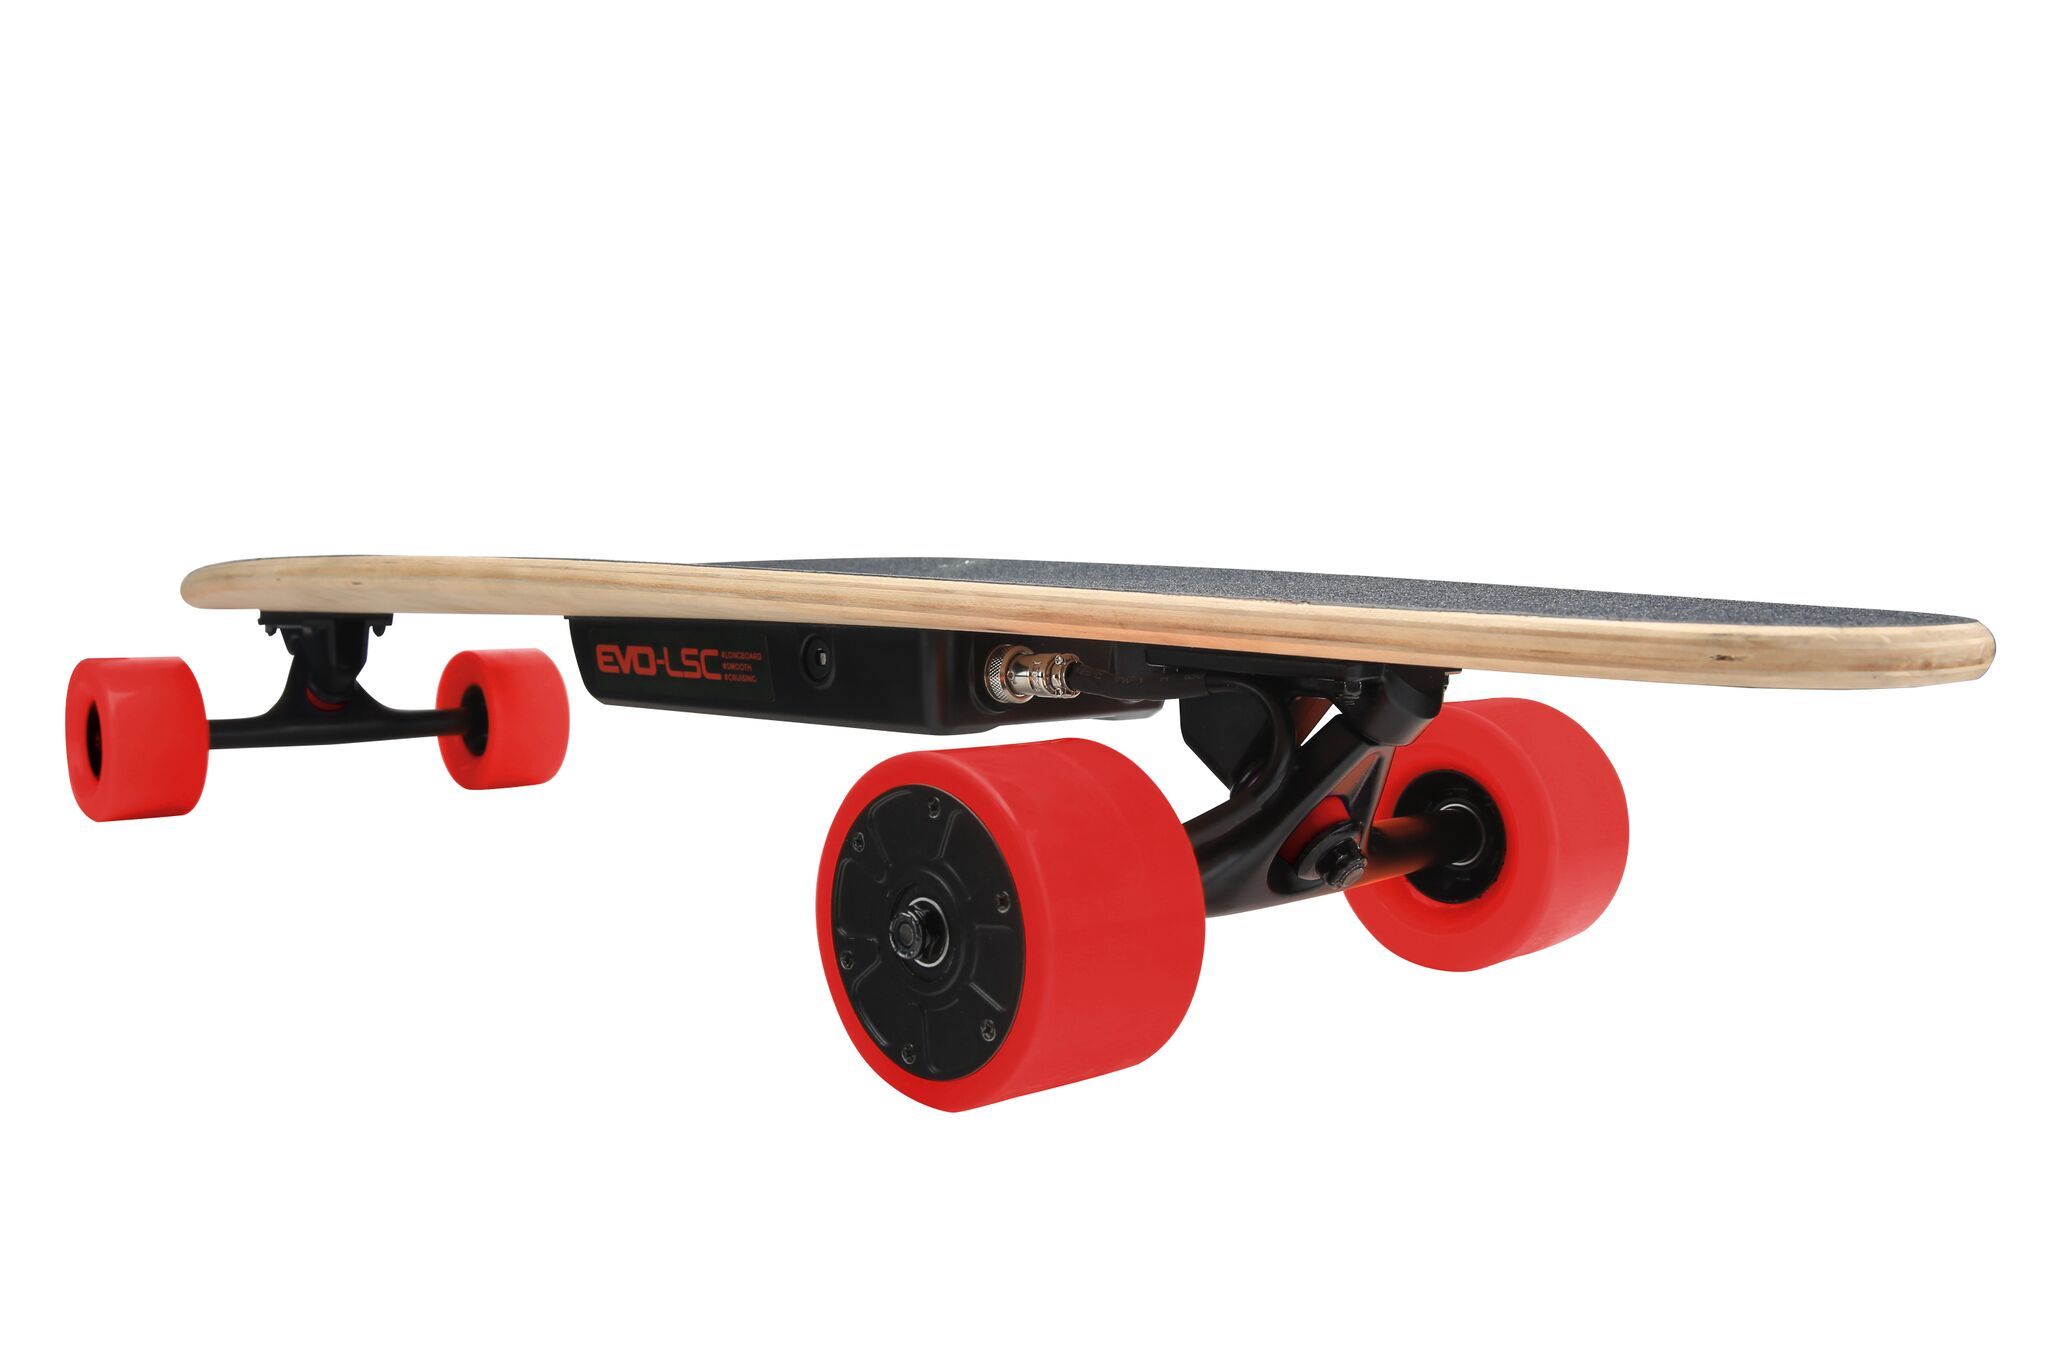 Skateboard électrique ultra léger EVO-LSC